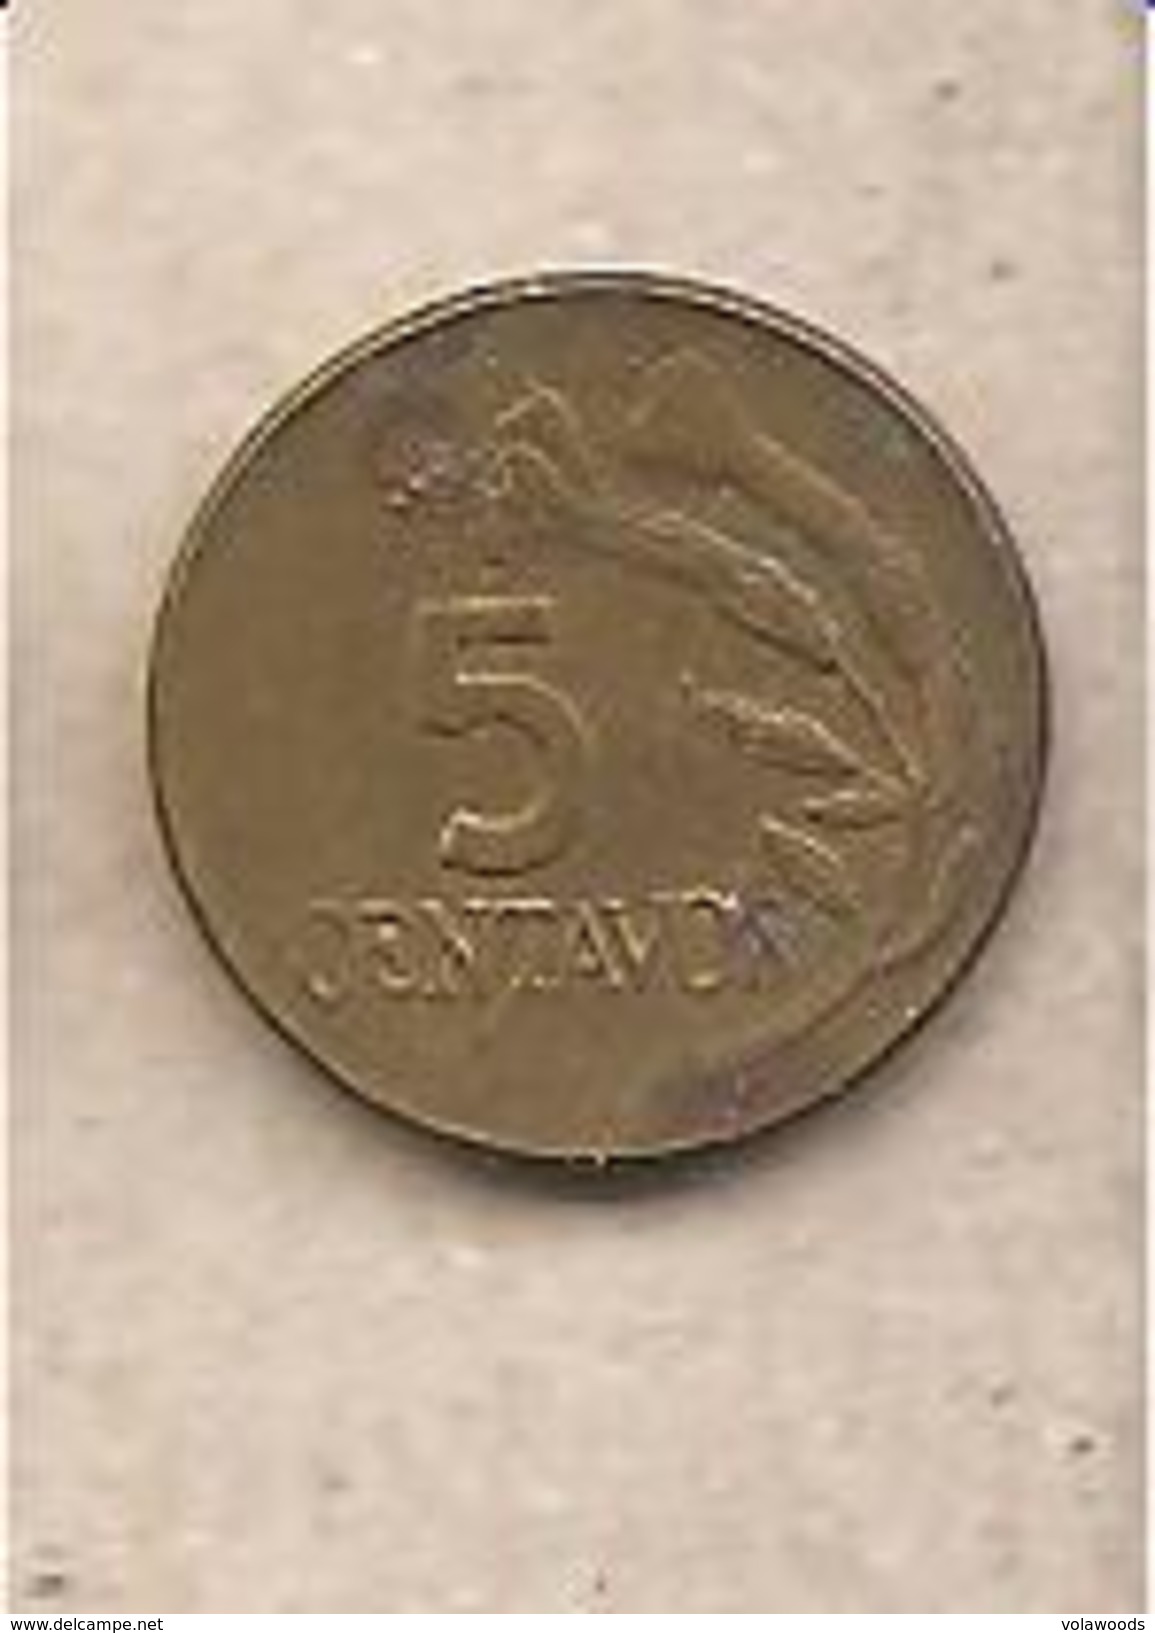 Perù - Moneta Circolata Da 5 Centesimi - 1973 - Peru